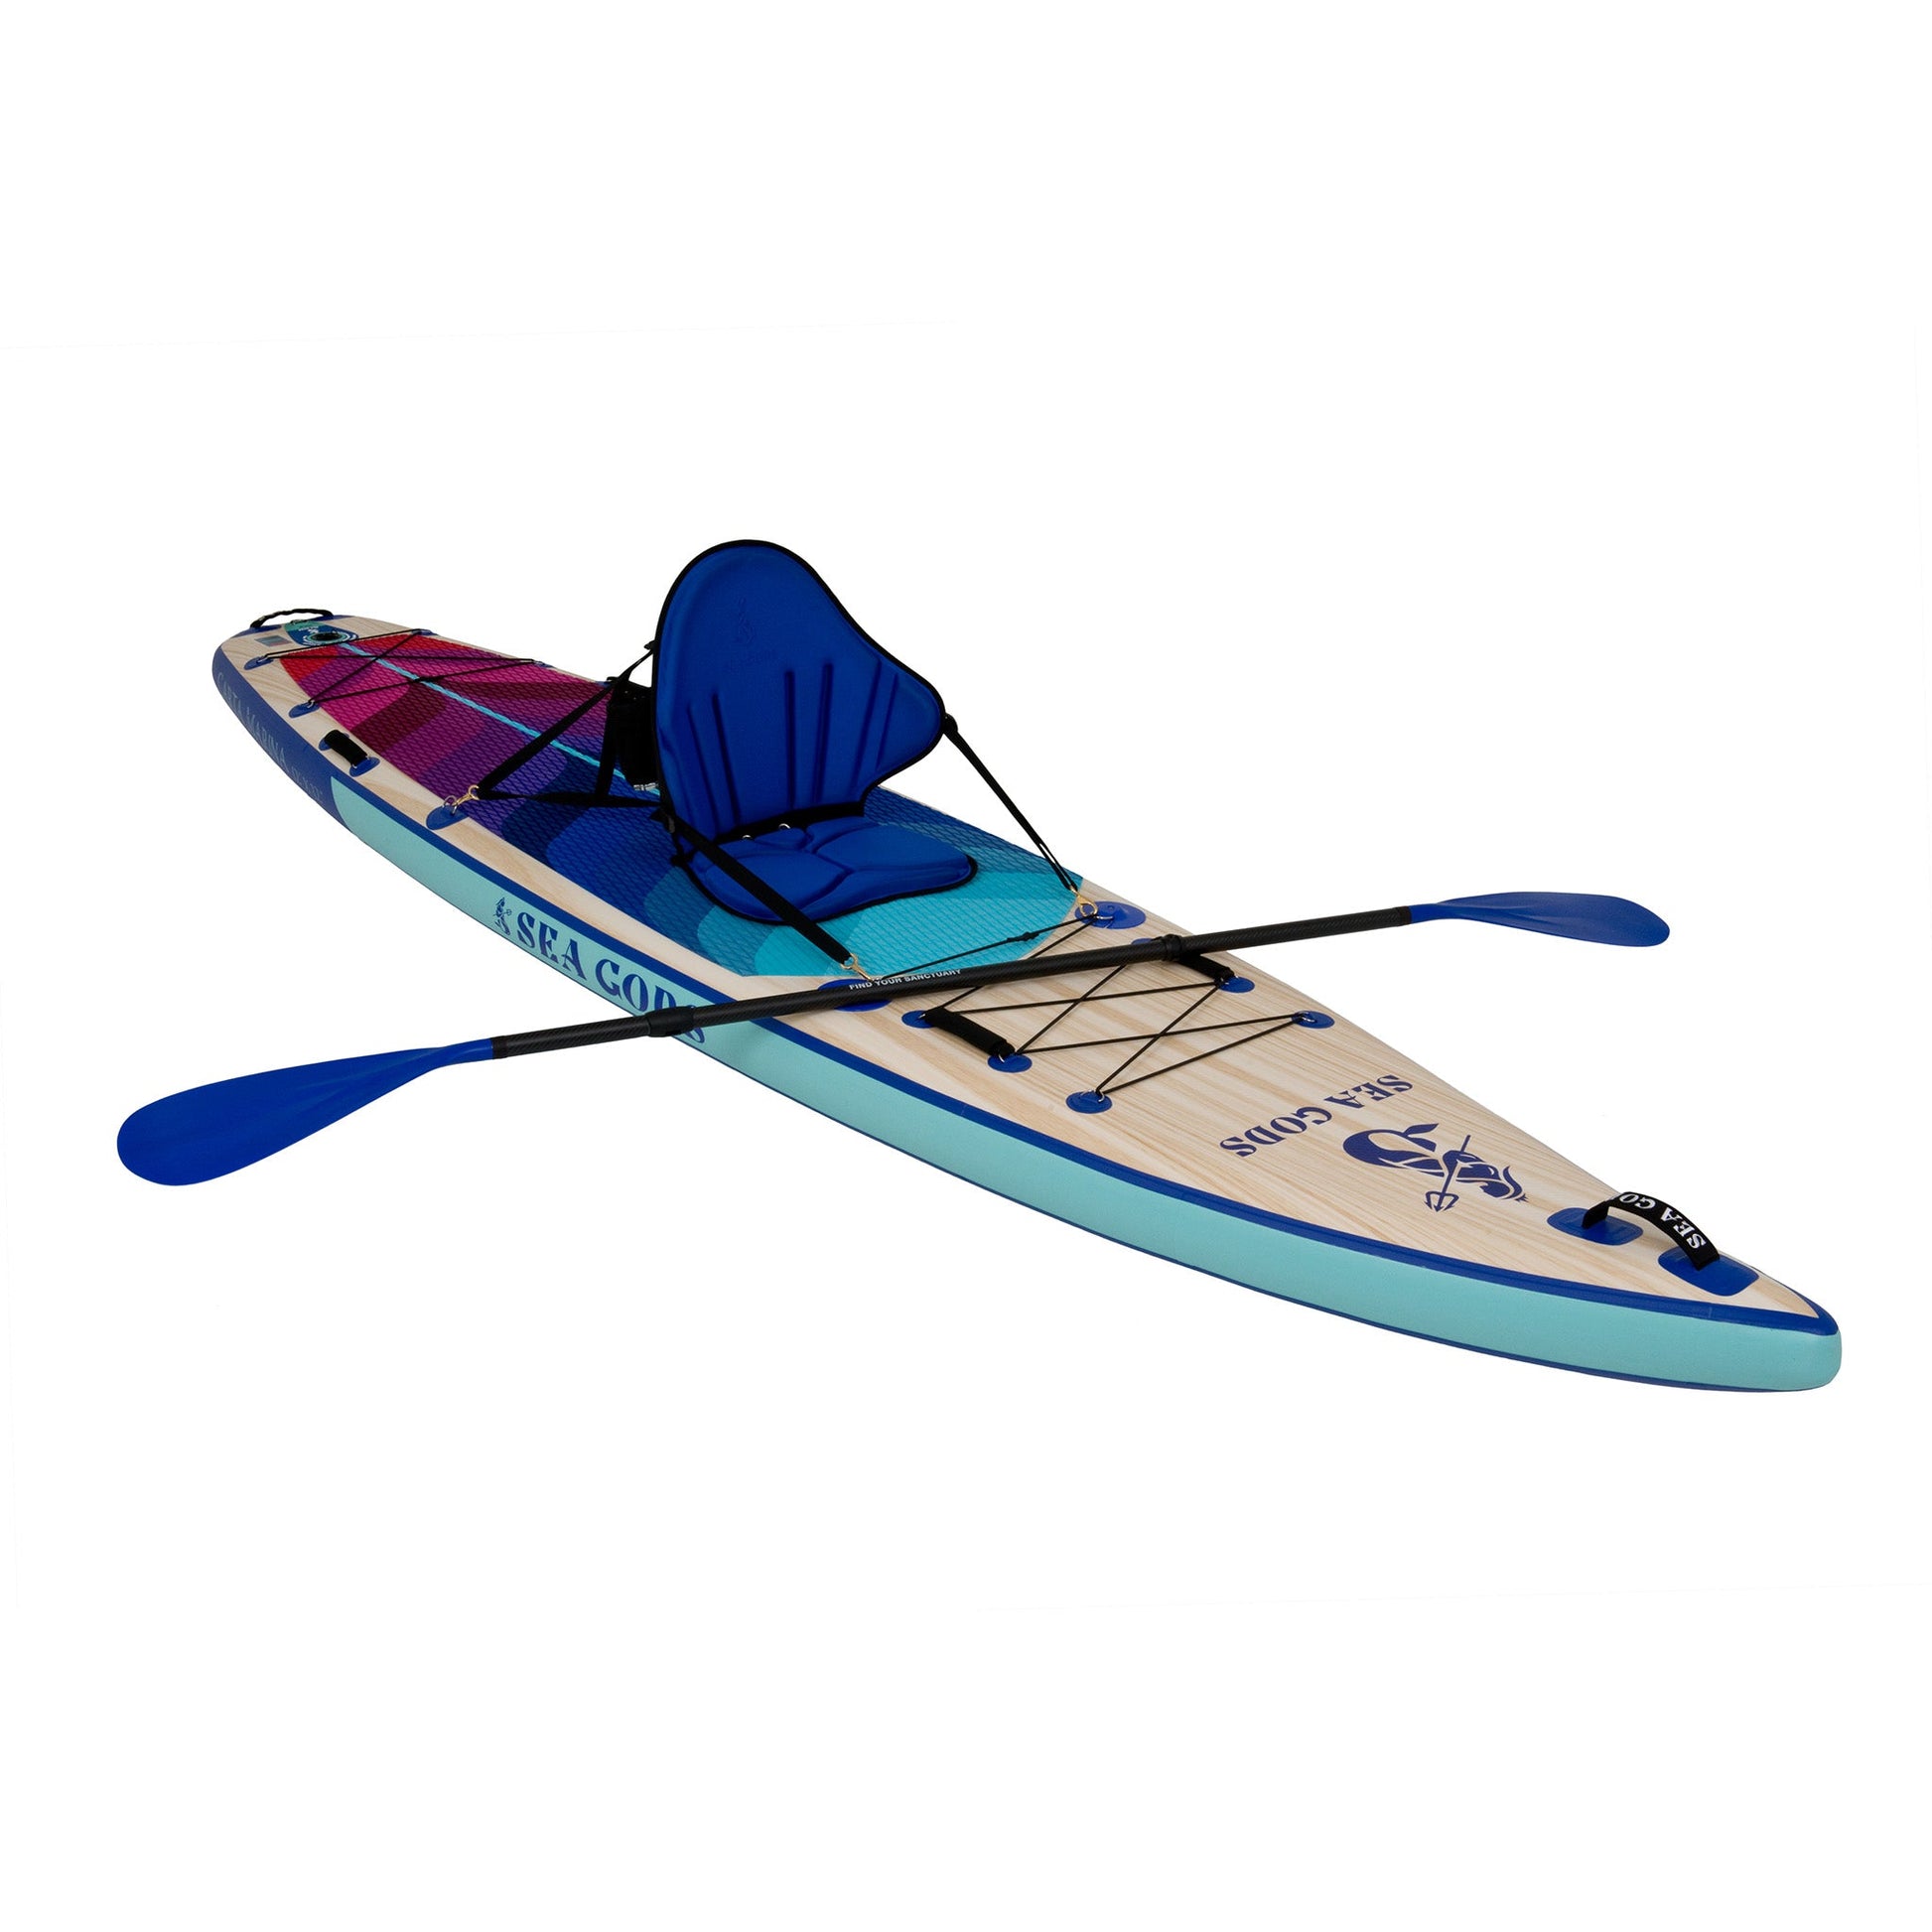 Top Touring iSUP Paddleboard with Kayak Seat. USA - 2022 Carta Marina 